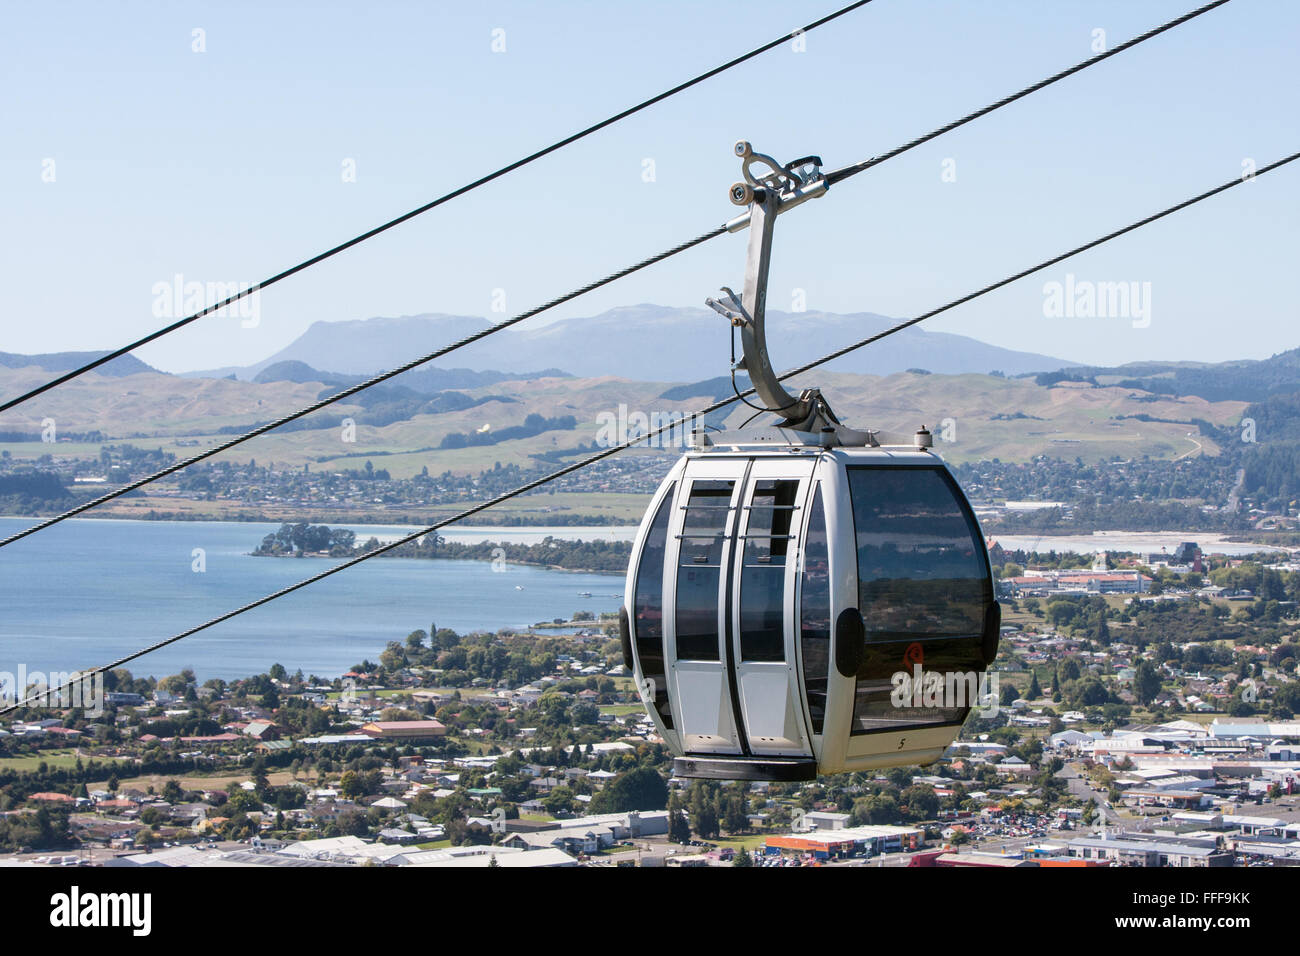 Skyline Gondola cable car cableway ride to peak at Rotorua,with views of Rotorua Lake and town,North Island,New Zealand. Stock Photo